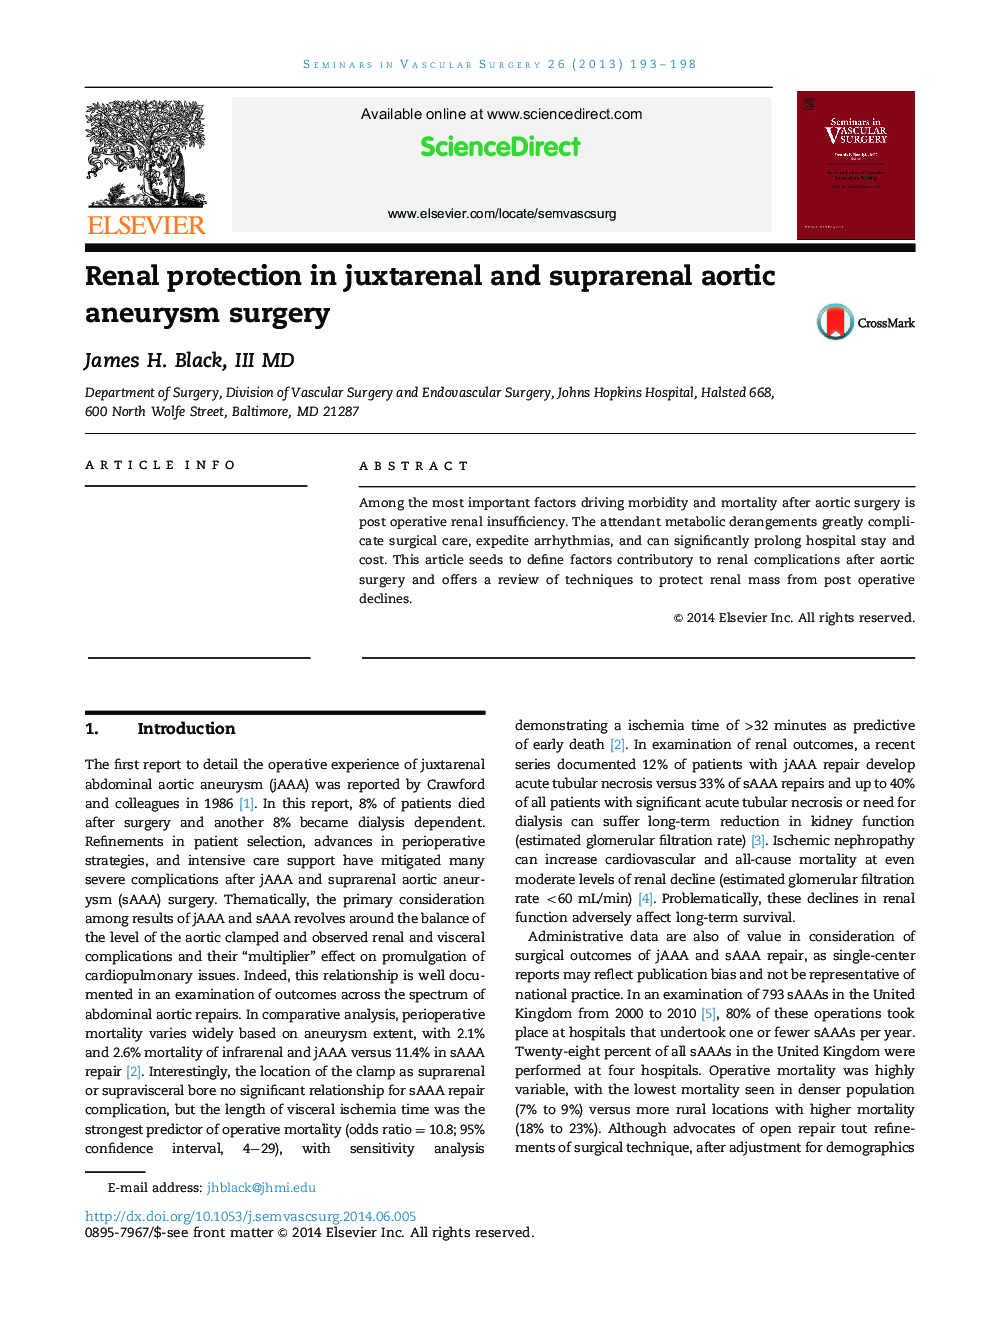 Renal protection in juxtarenal and suprarenal aortic aneurysm surgery